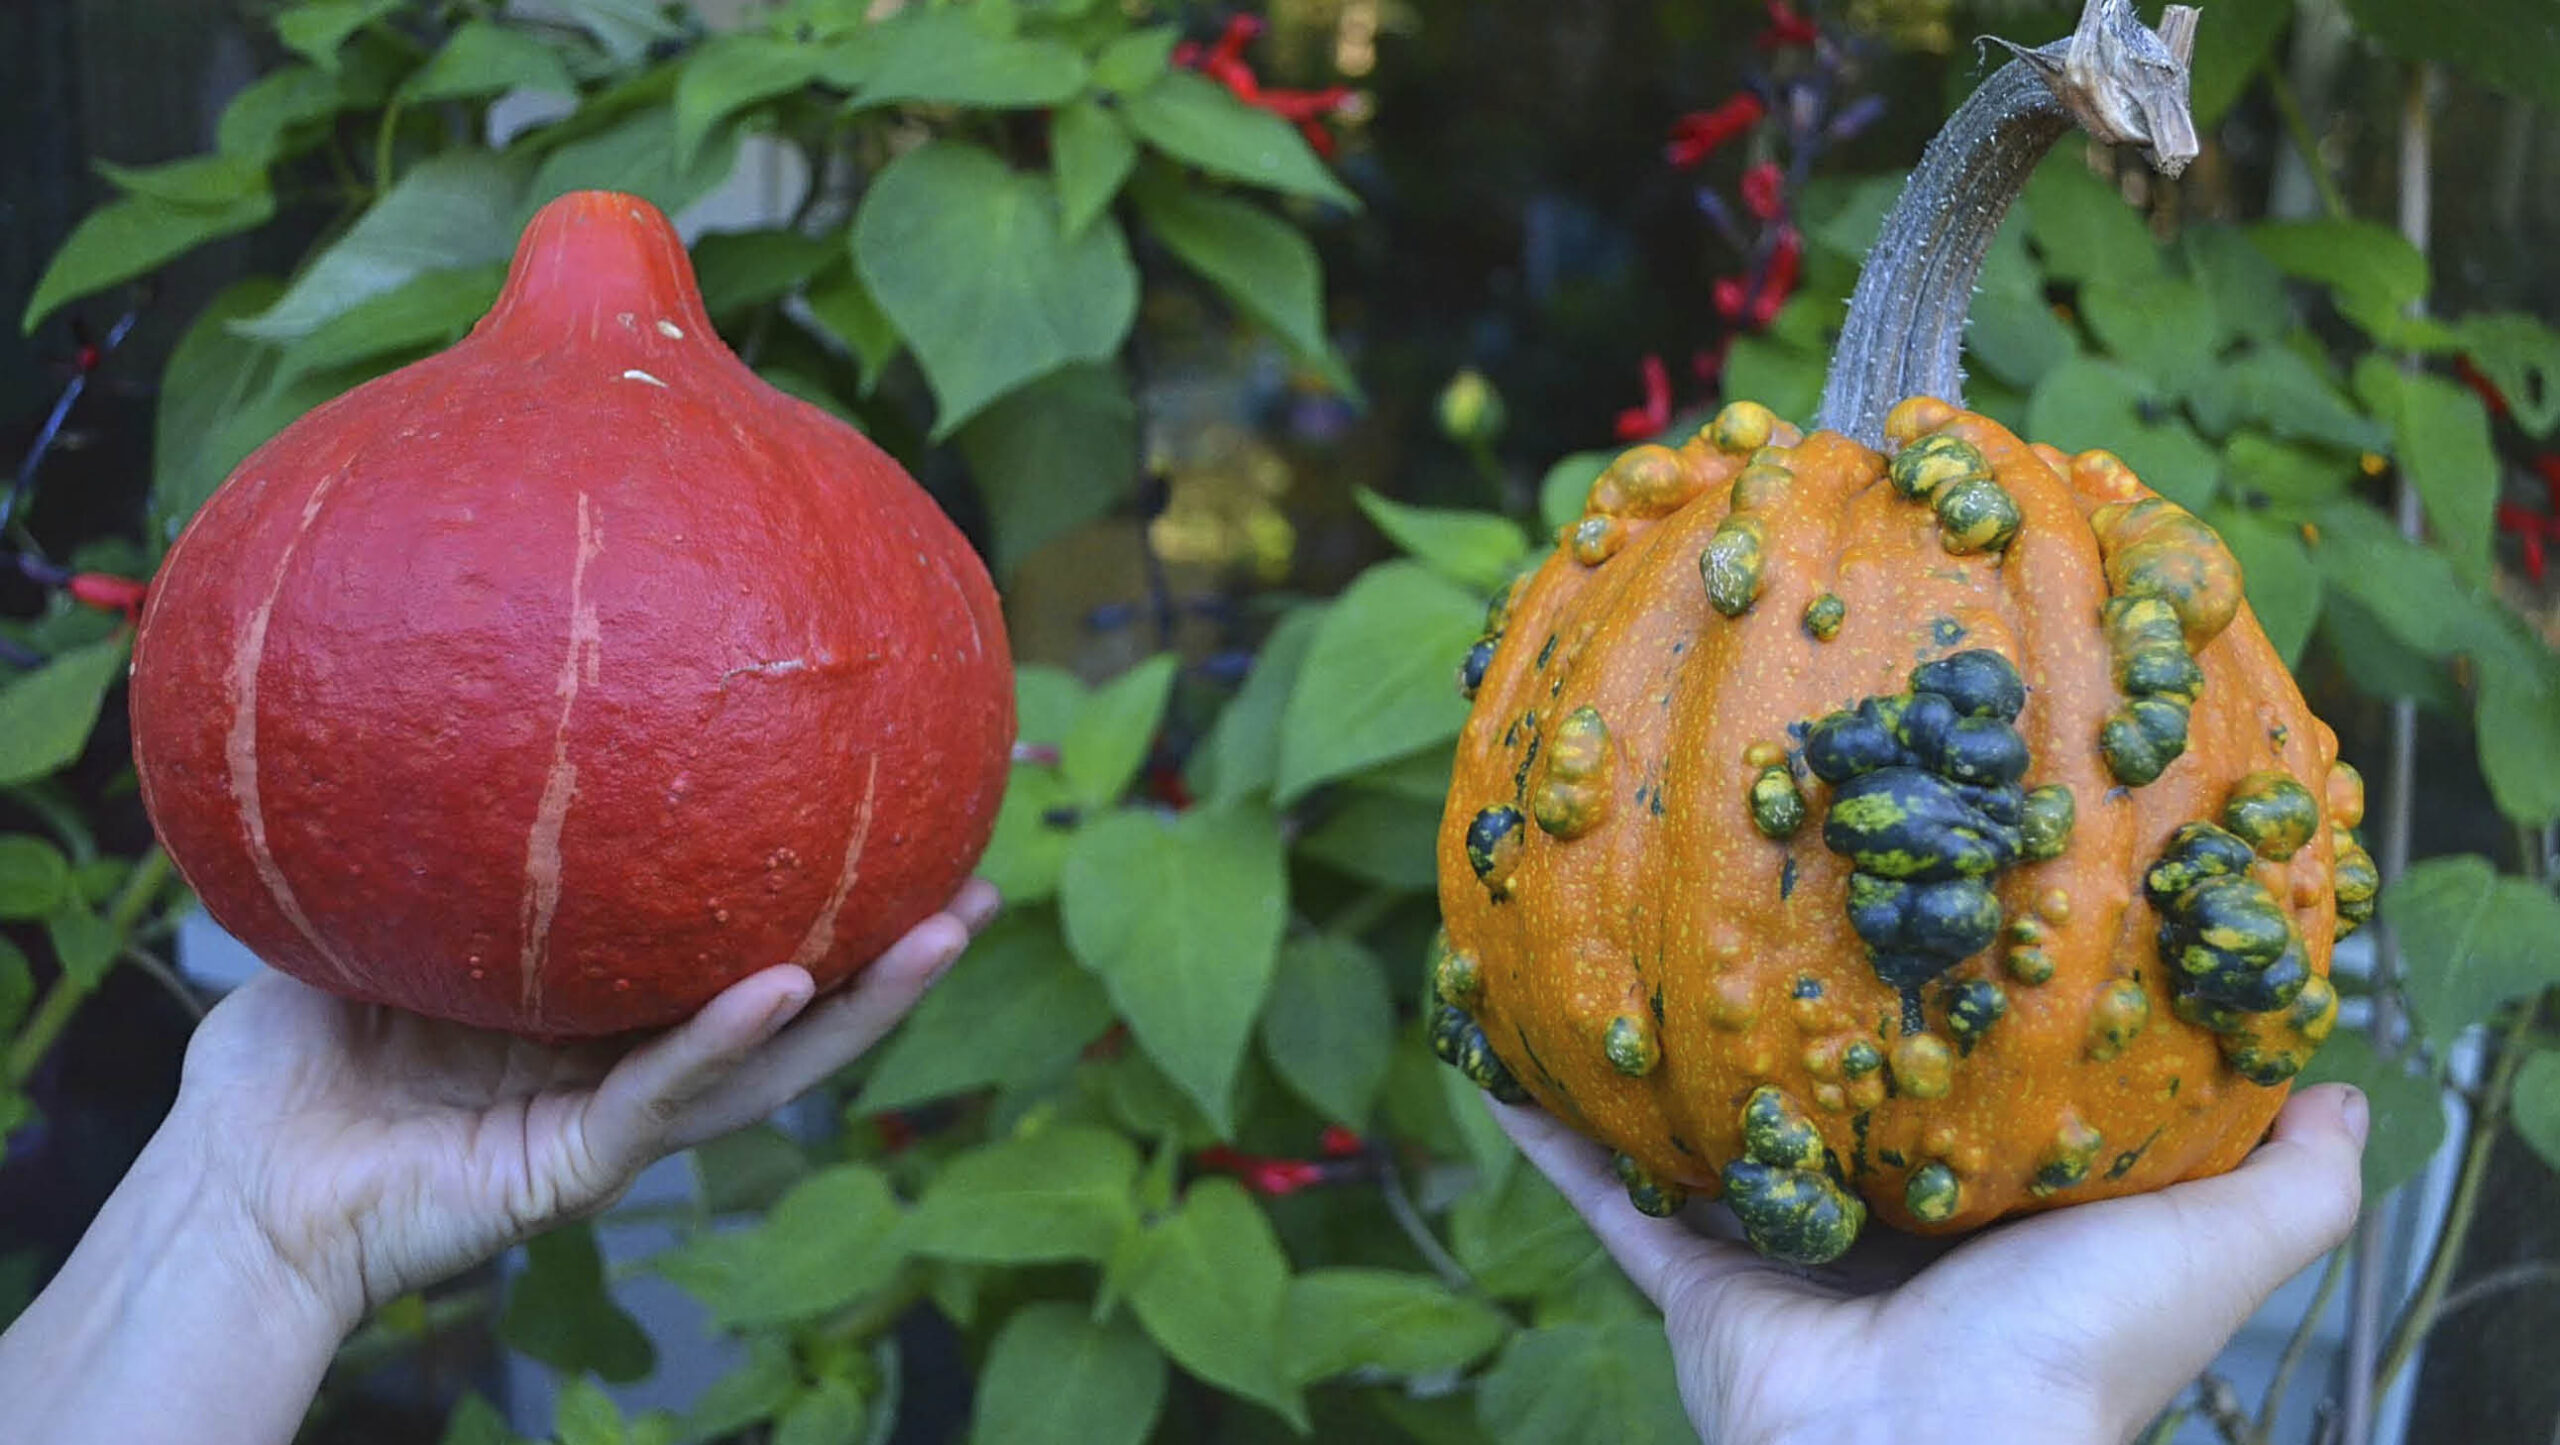 Kuri (left) and pimply pumpkin (right).